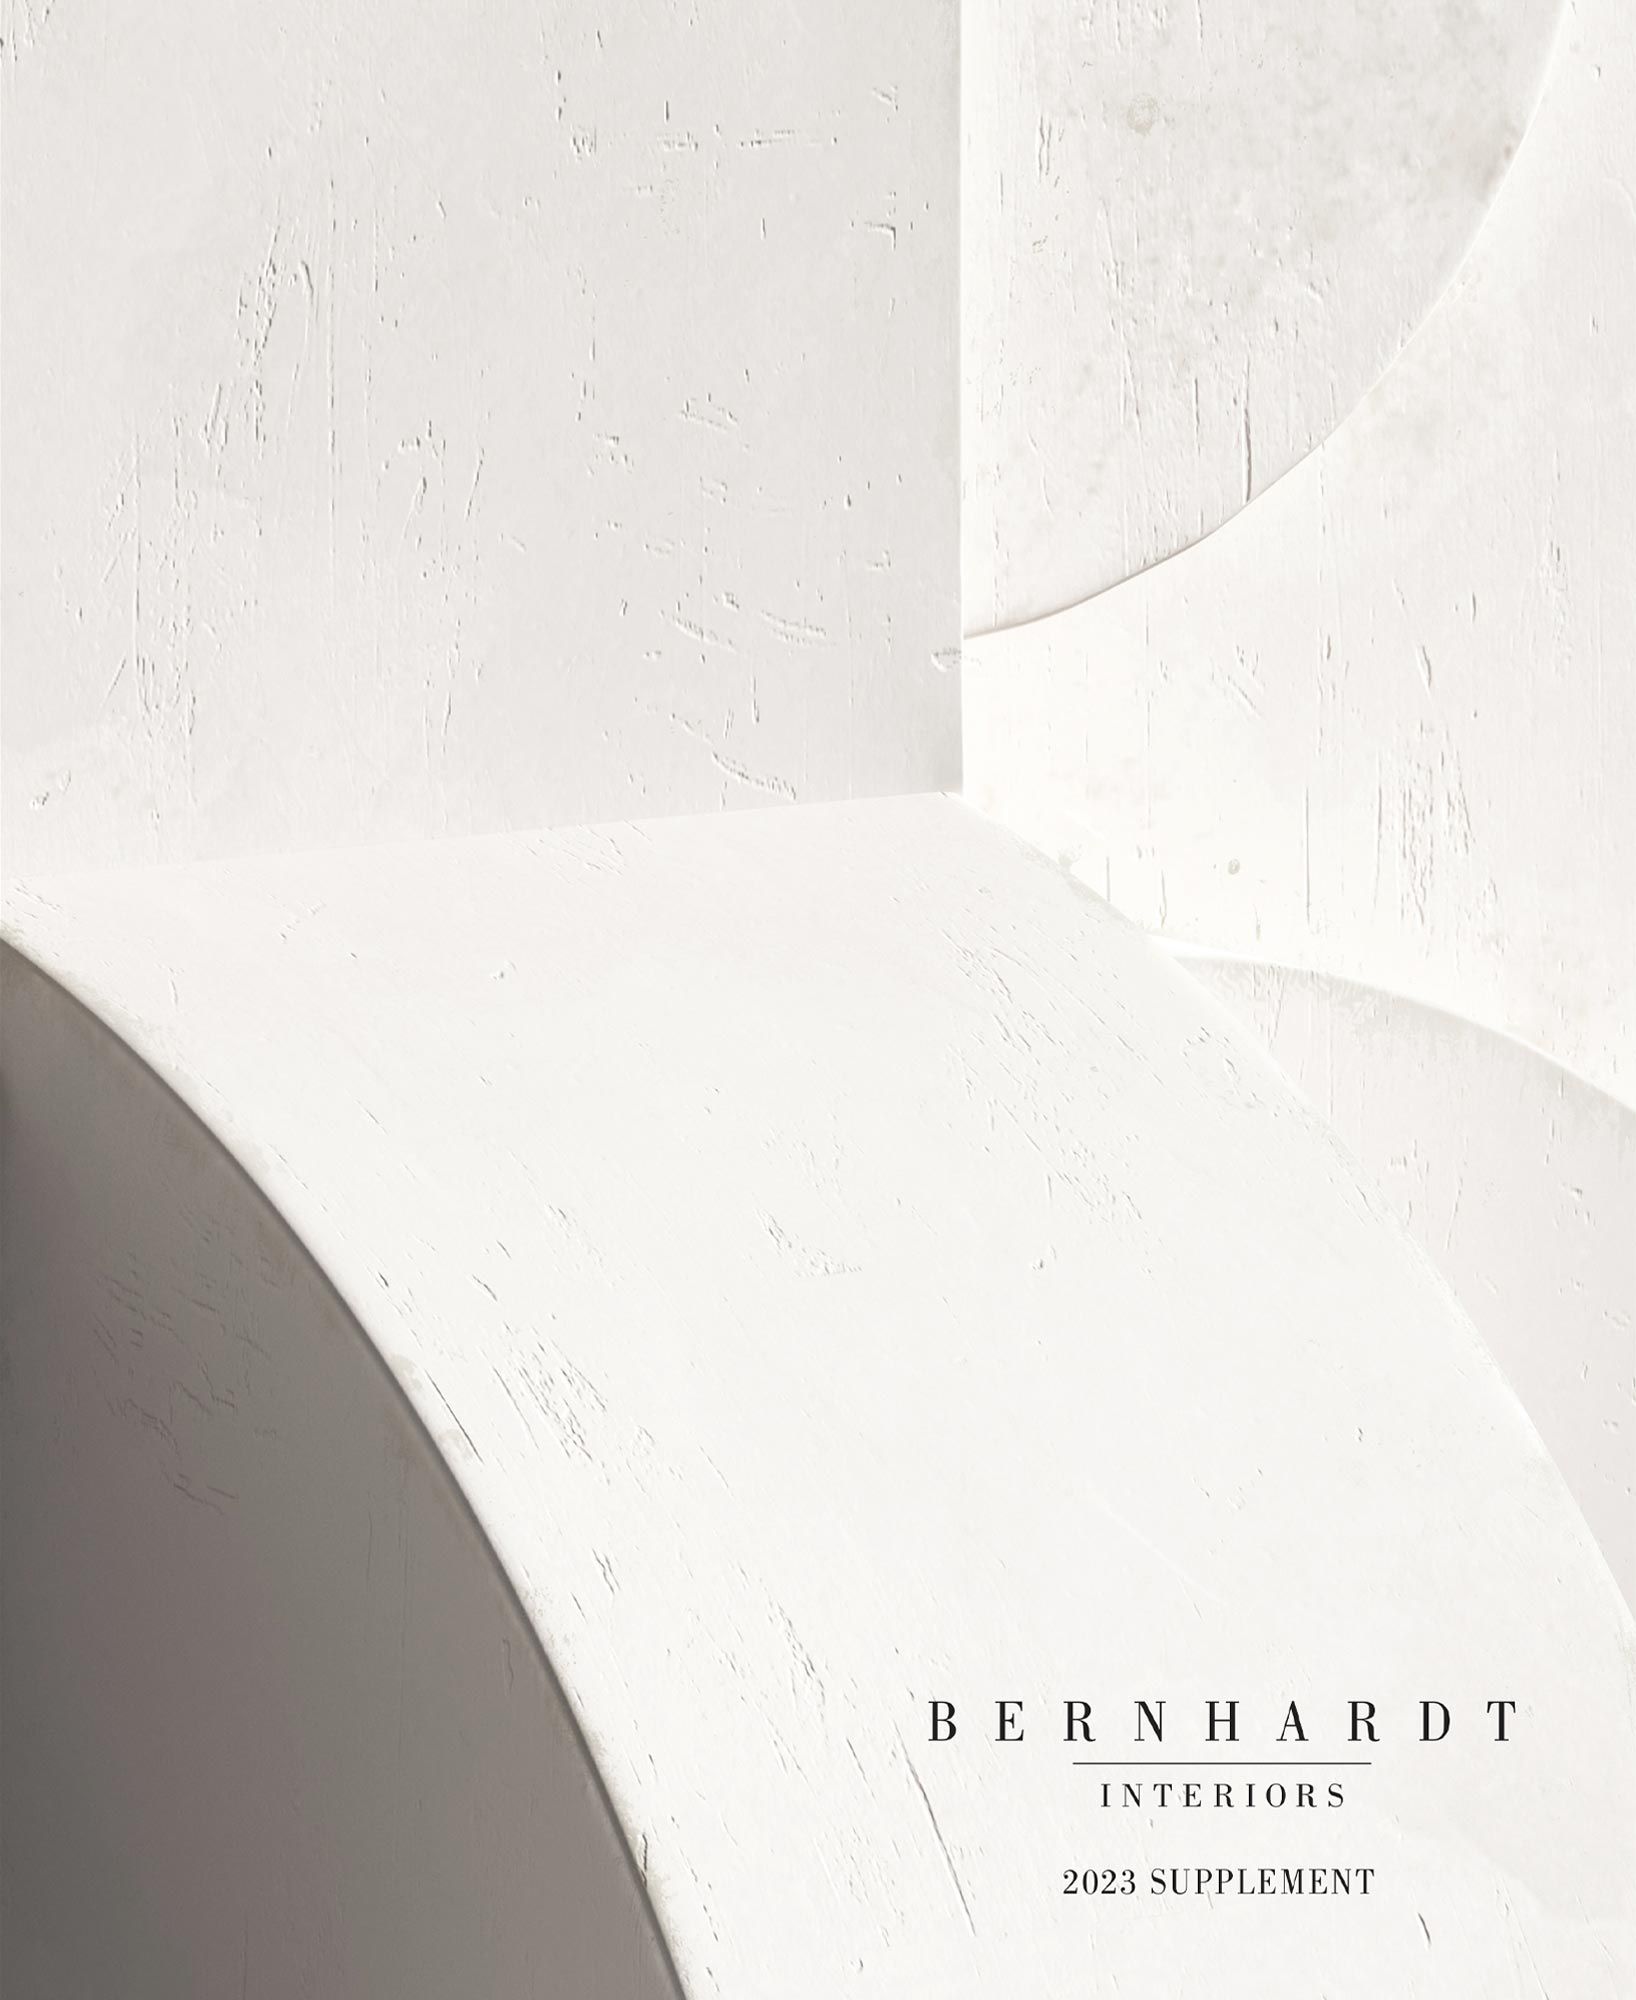 Bernhardt Interiors Supplement